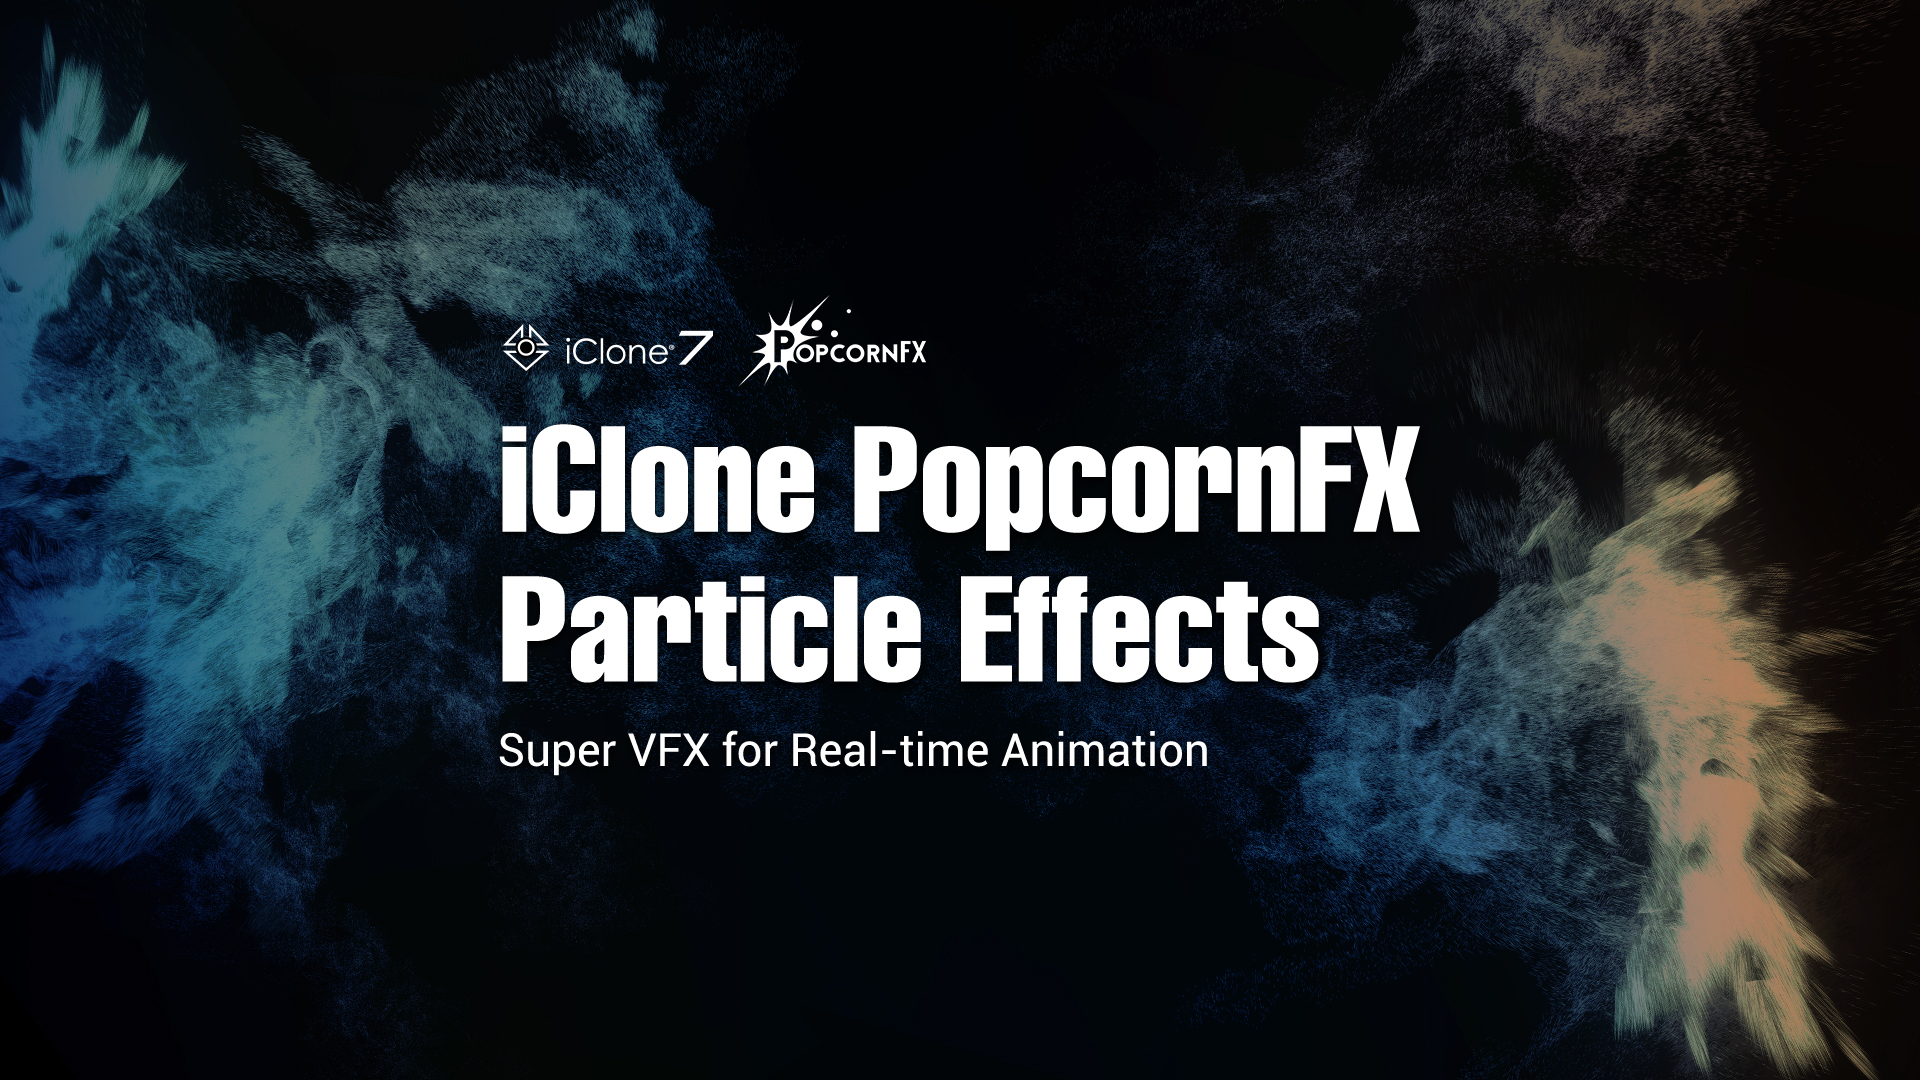 iClone-PopcornFX_banner_1920x1080.jpg